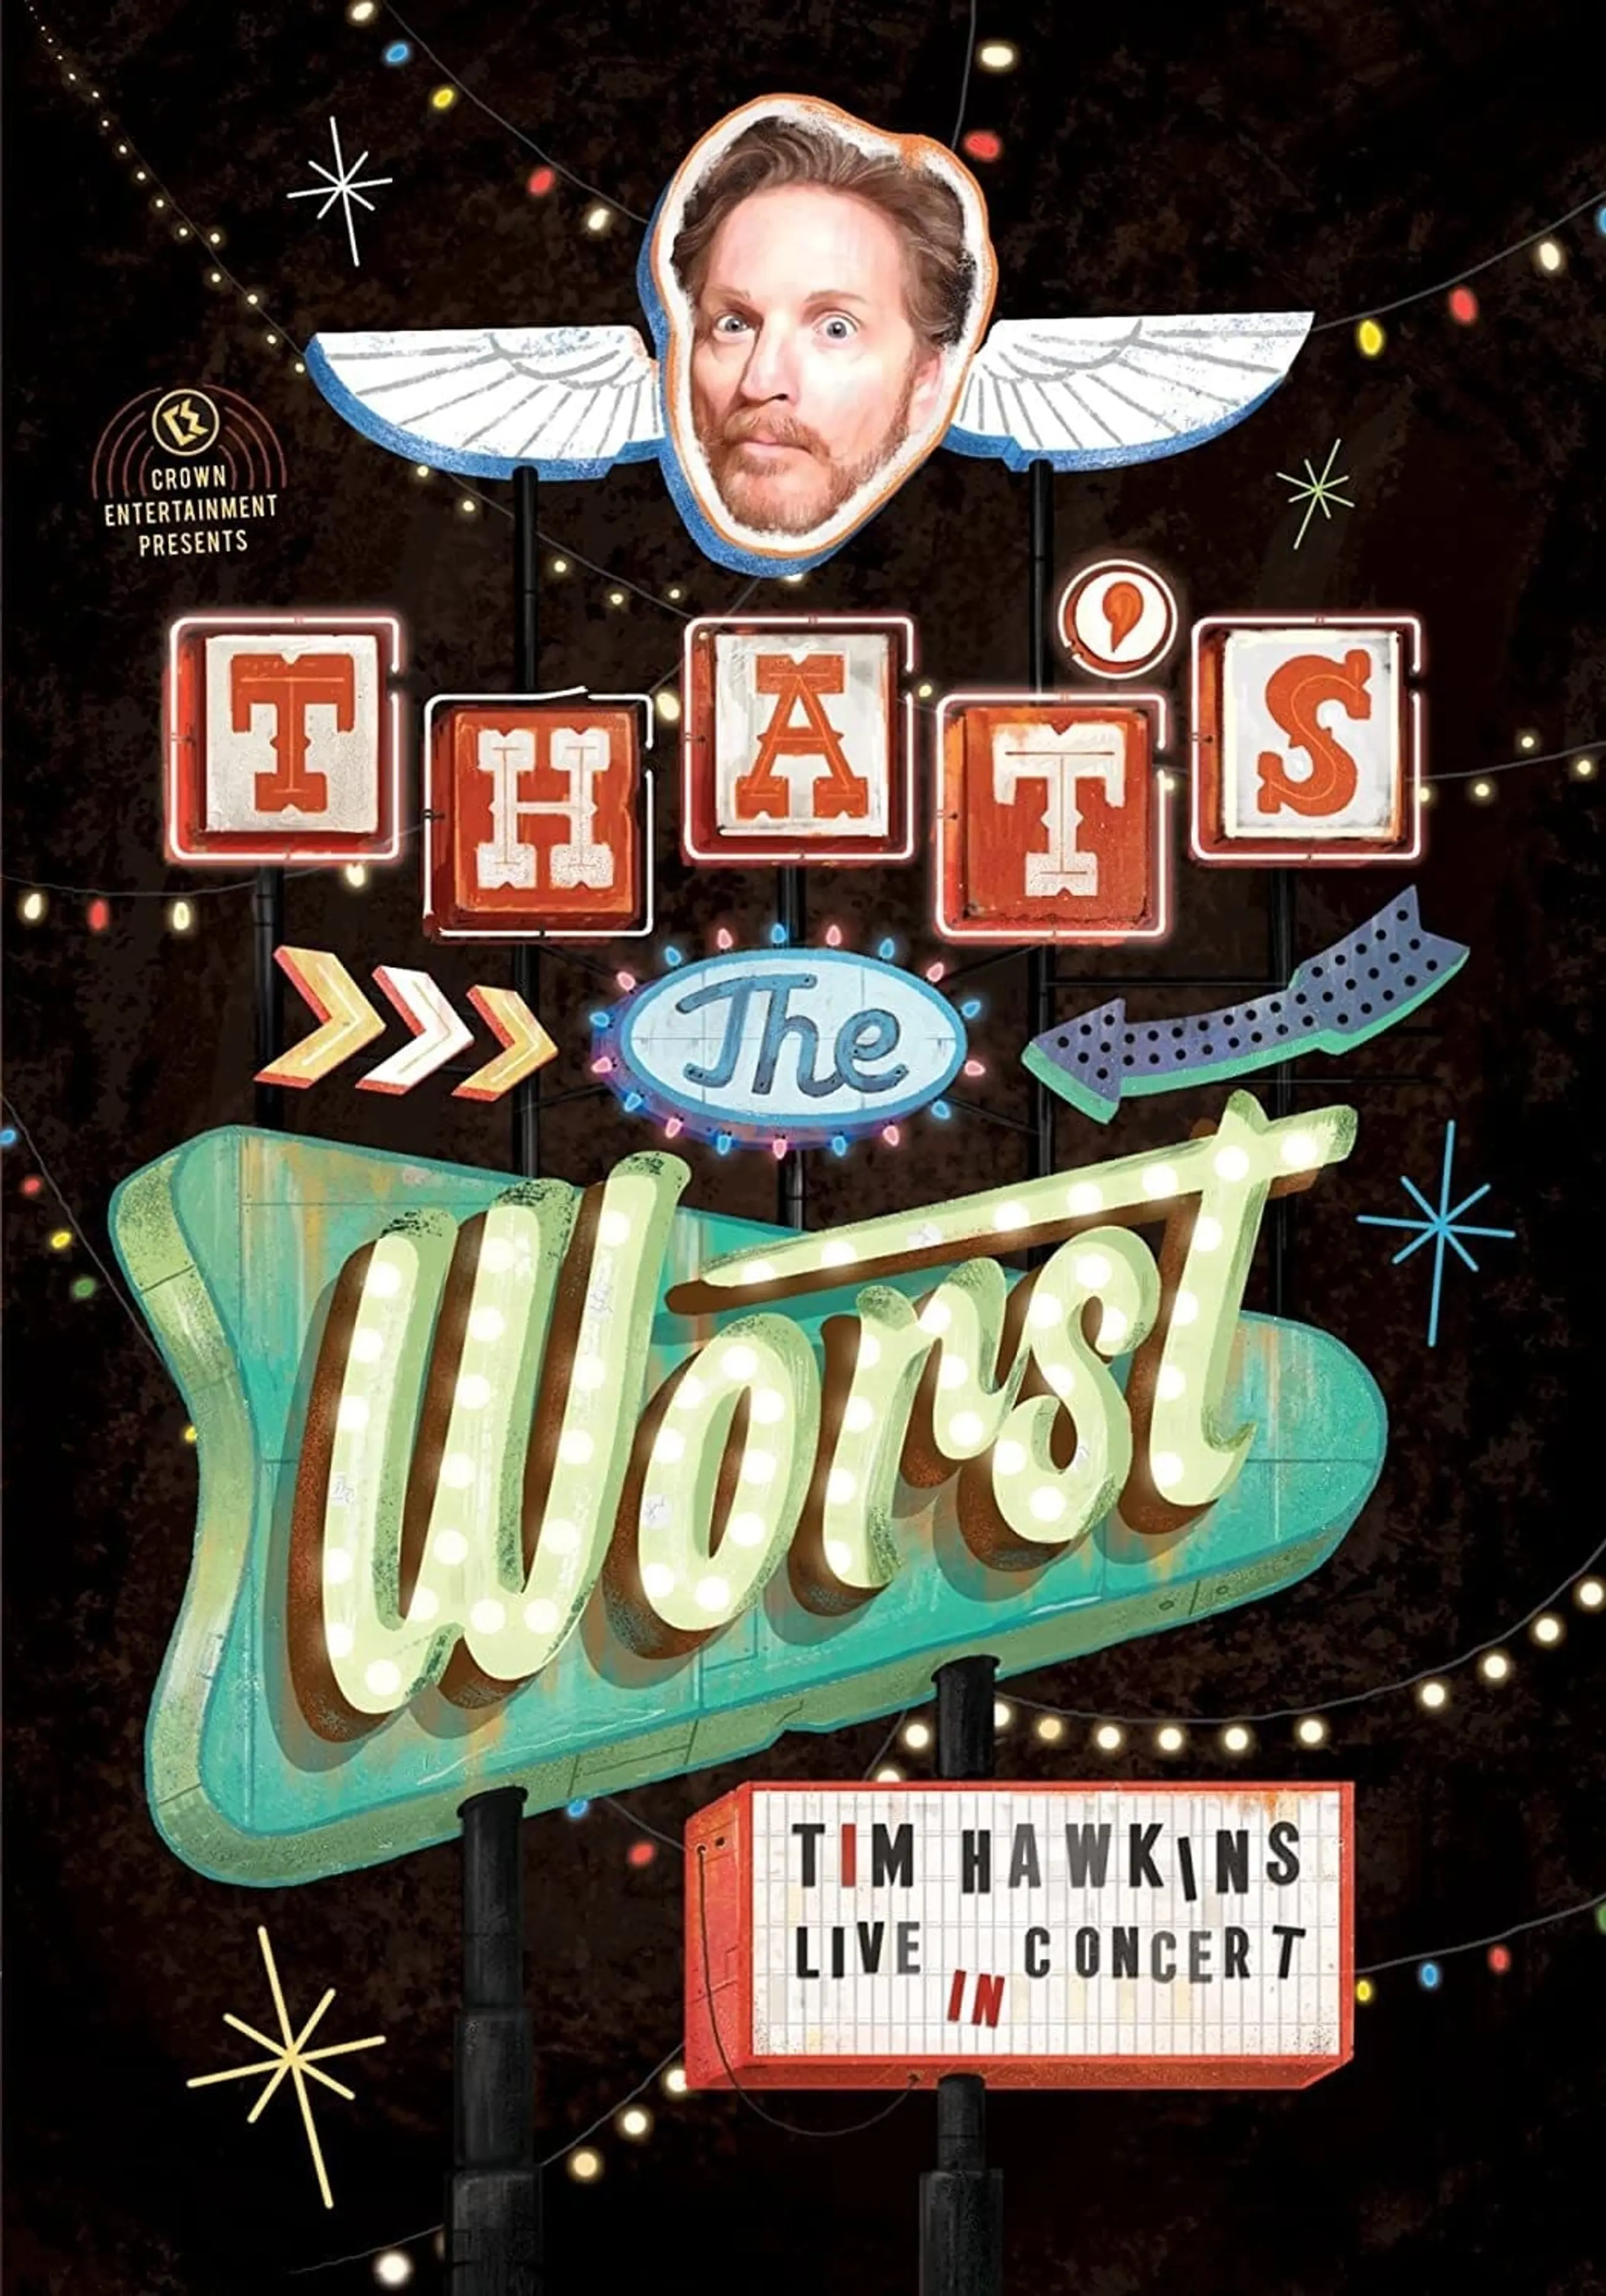 Tim Hawkins: That's the Worst!